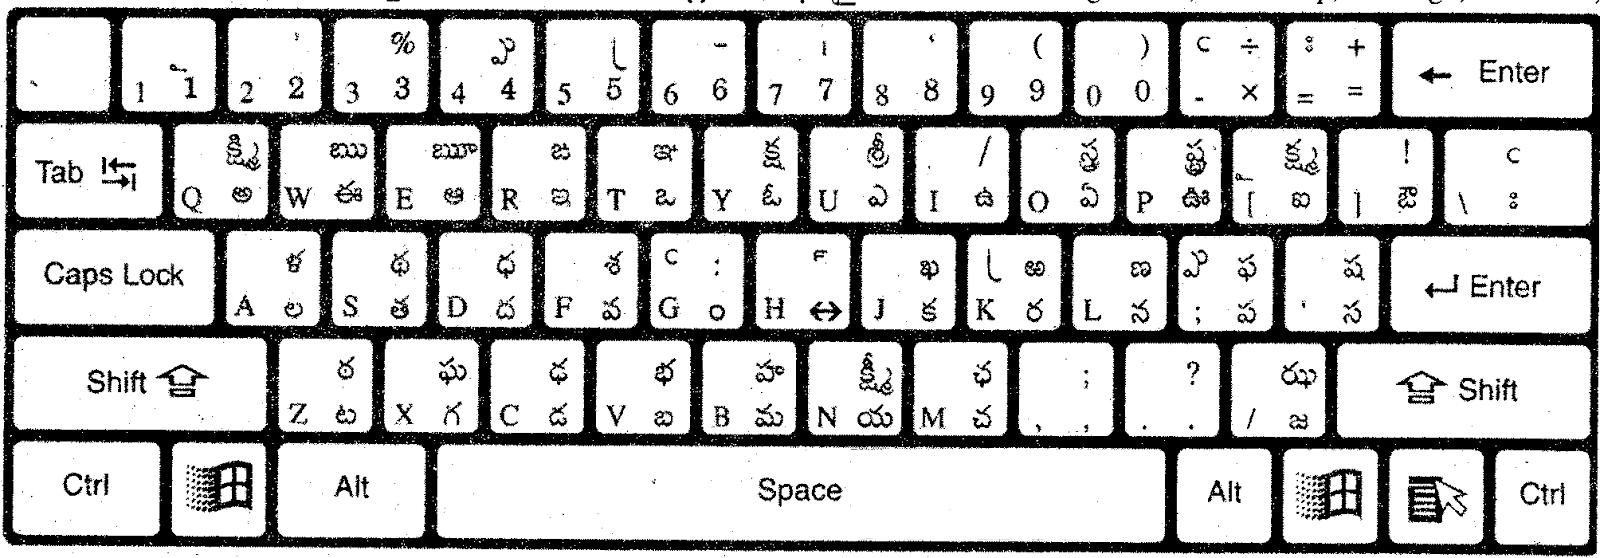 anu script telugu apple keyboard pdf